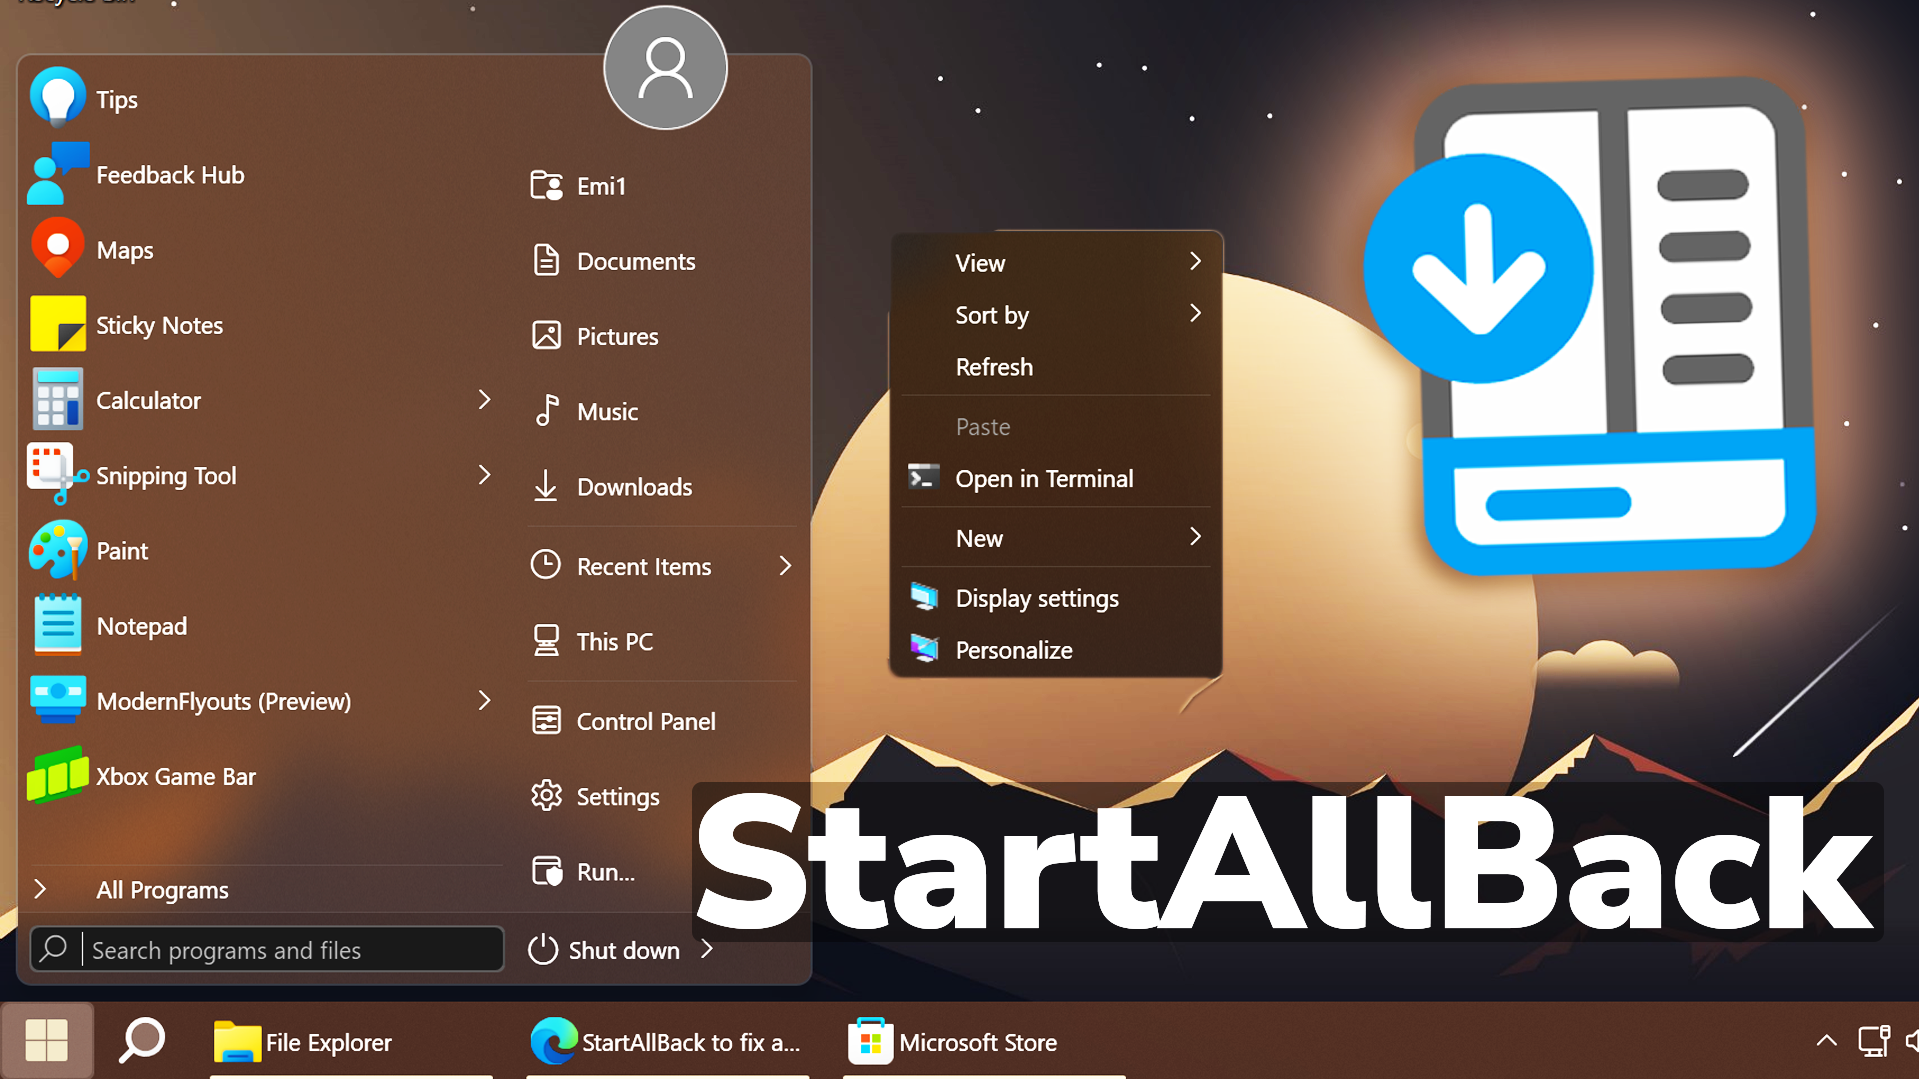 StartAllBack 3.6.10 download the last version for apple